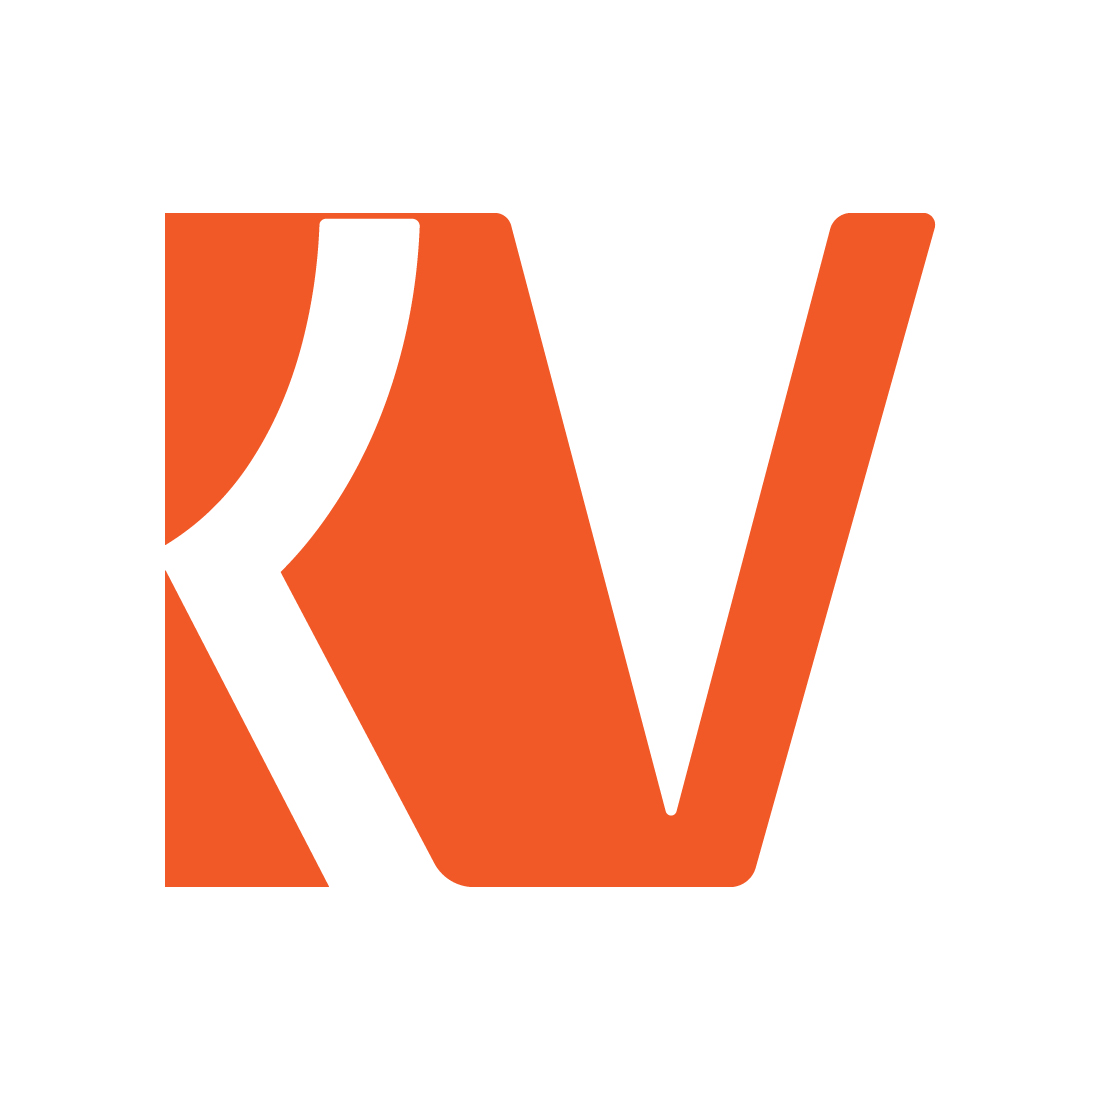 professional KV letters logo design KV logo vector icon best company identity VK logo monogram template arts preview image.